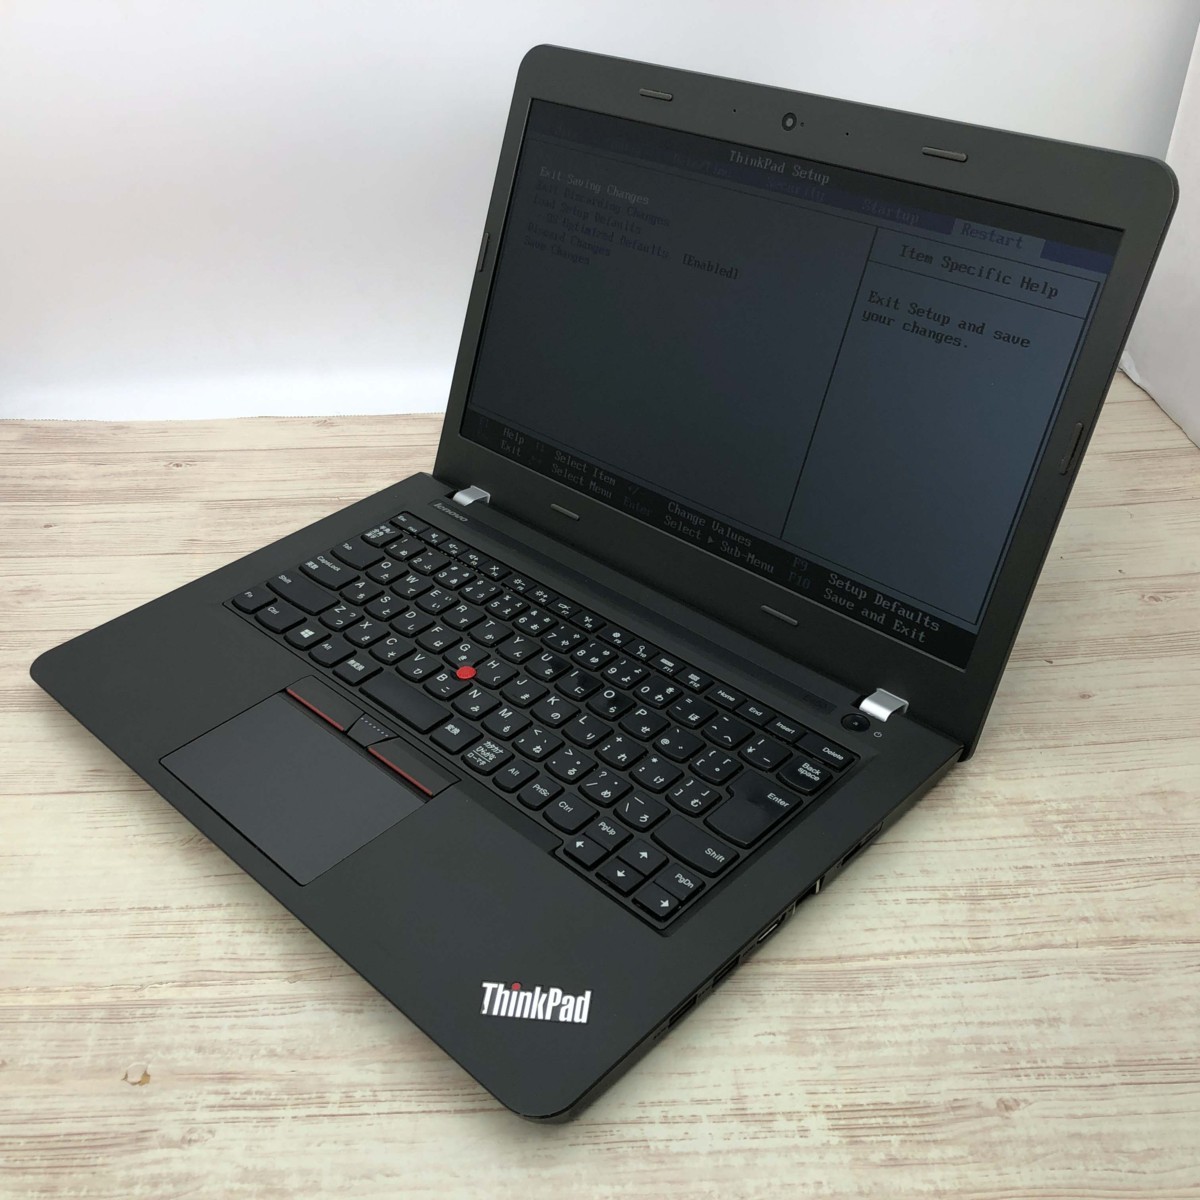 Lenovo ThinkPad E450 20DC-CT01WW Core i5 5200U 2.20GHz/4GB/500GB 〔A0619〕